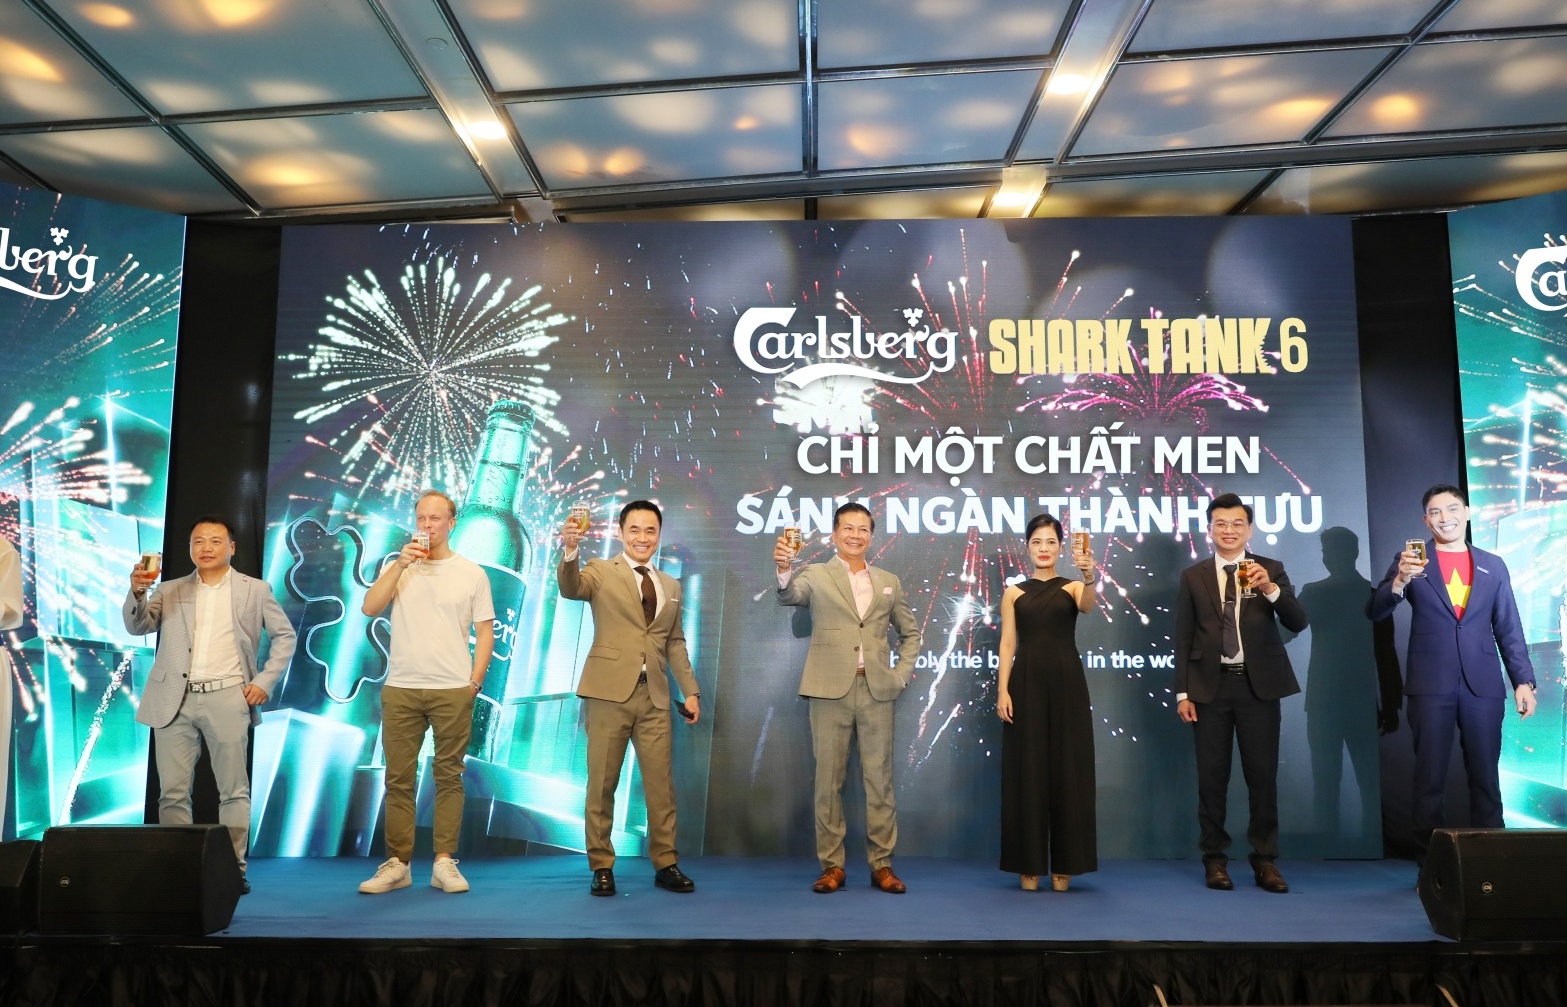 Carlsberg and Shark Tank Vietnam join forces to celebrate national progress